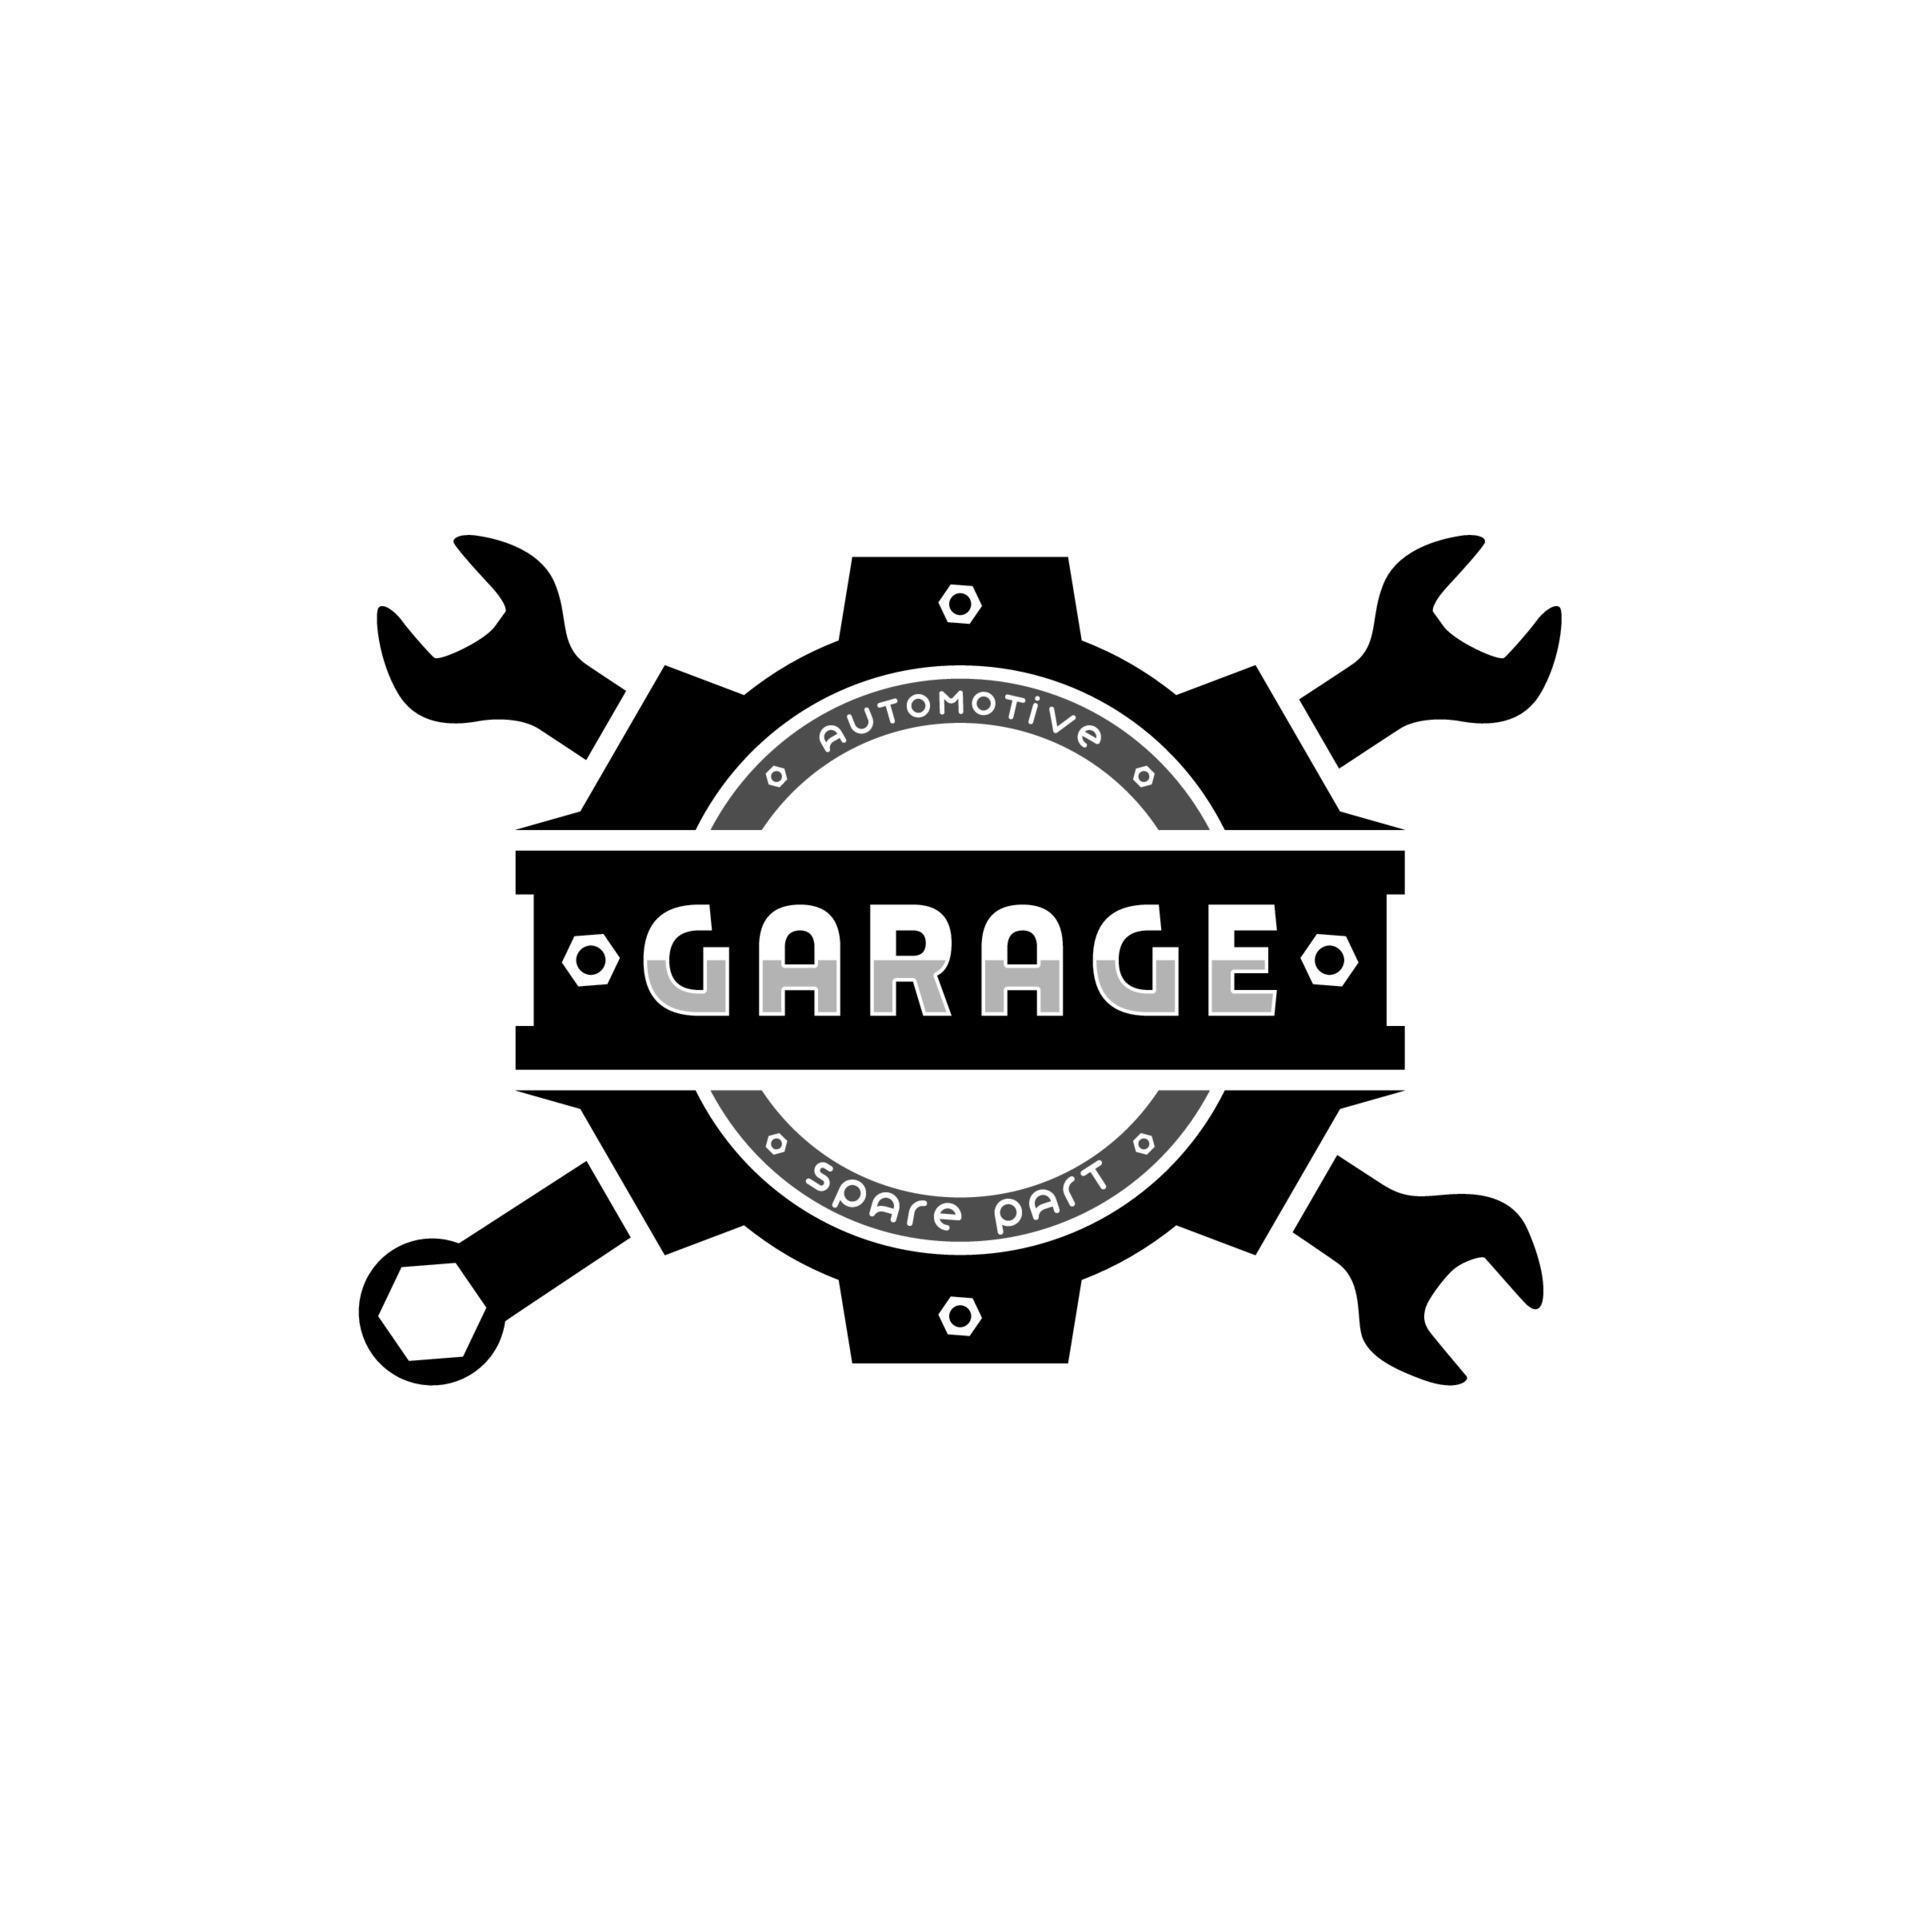 Gear And Wrench For Workshop Garage Logo Design Inspiration 8608513 ...